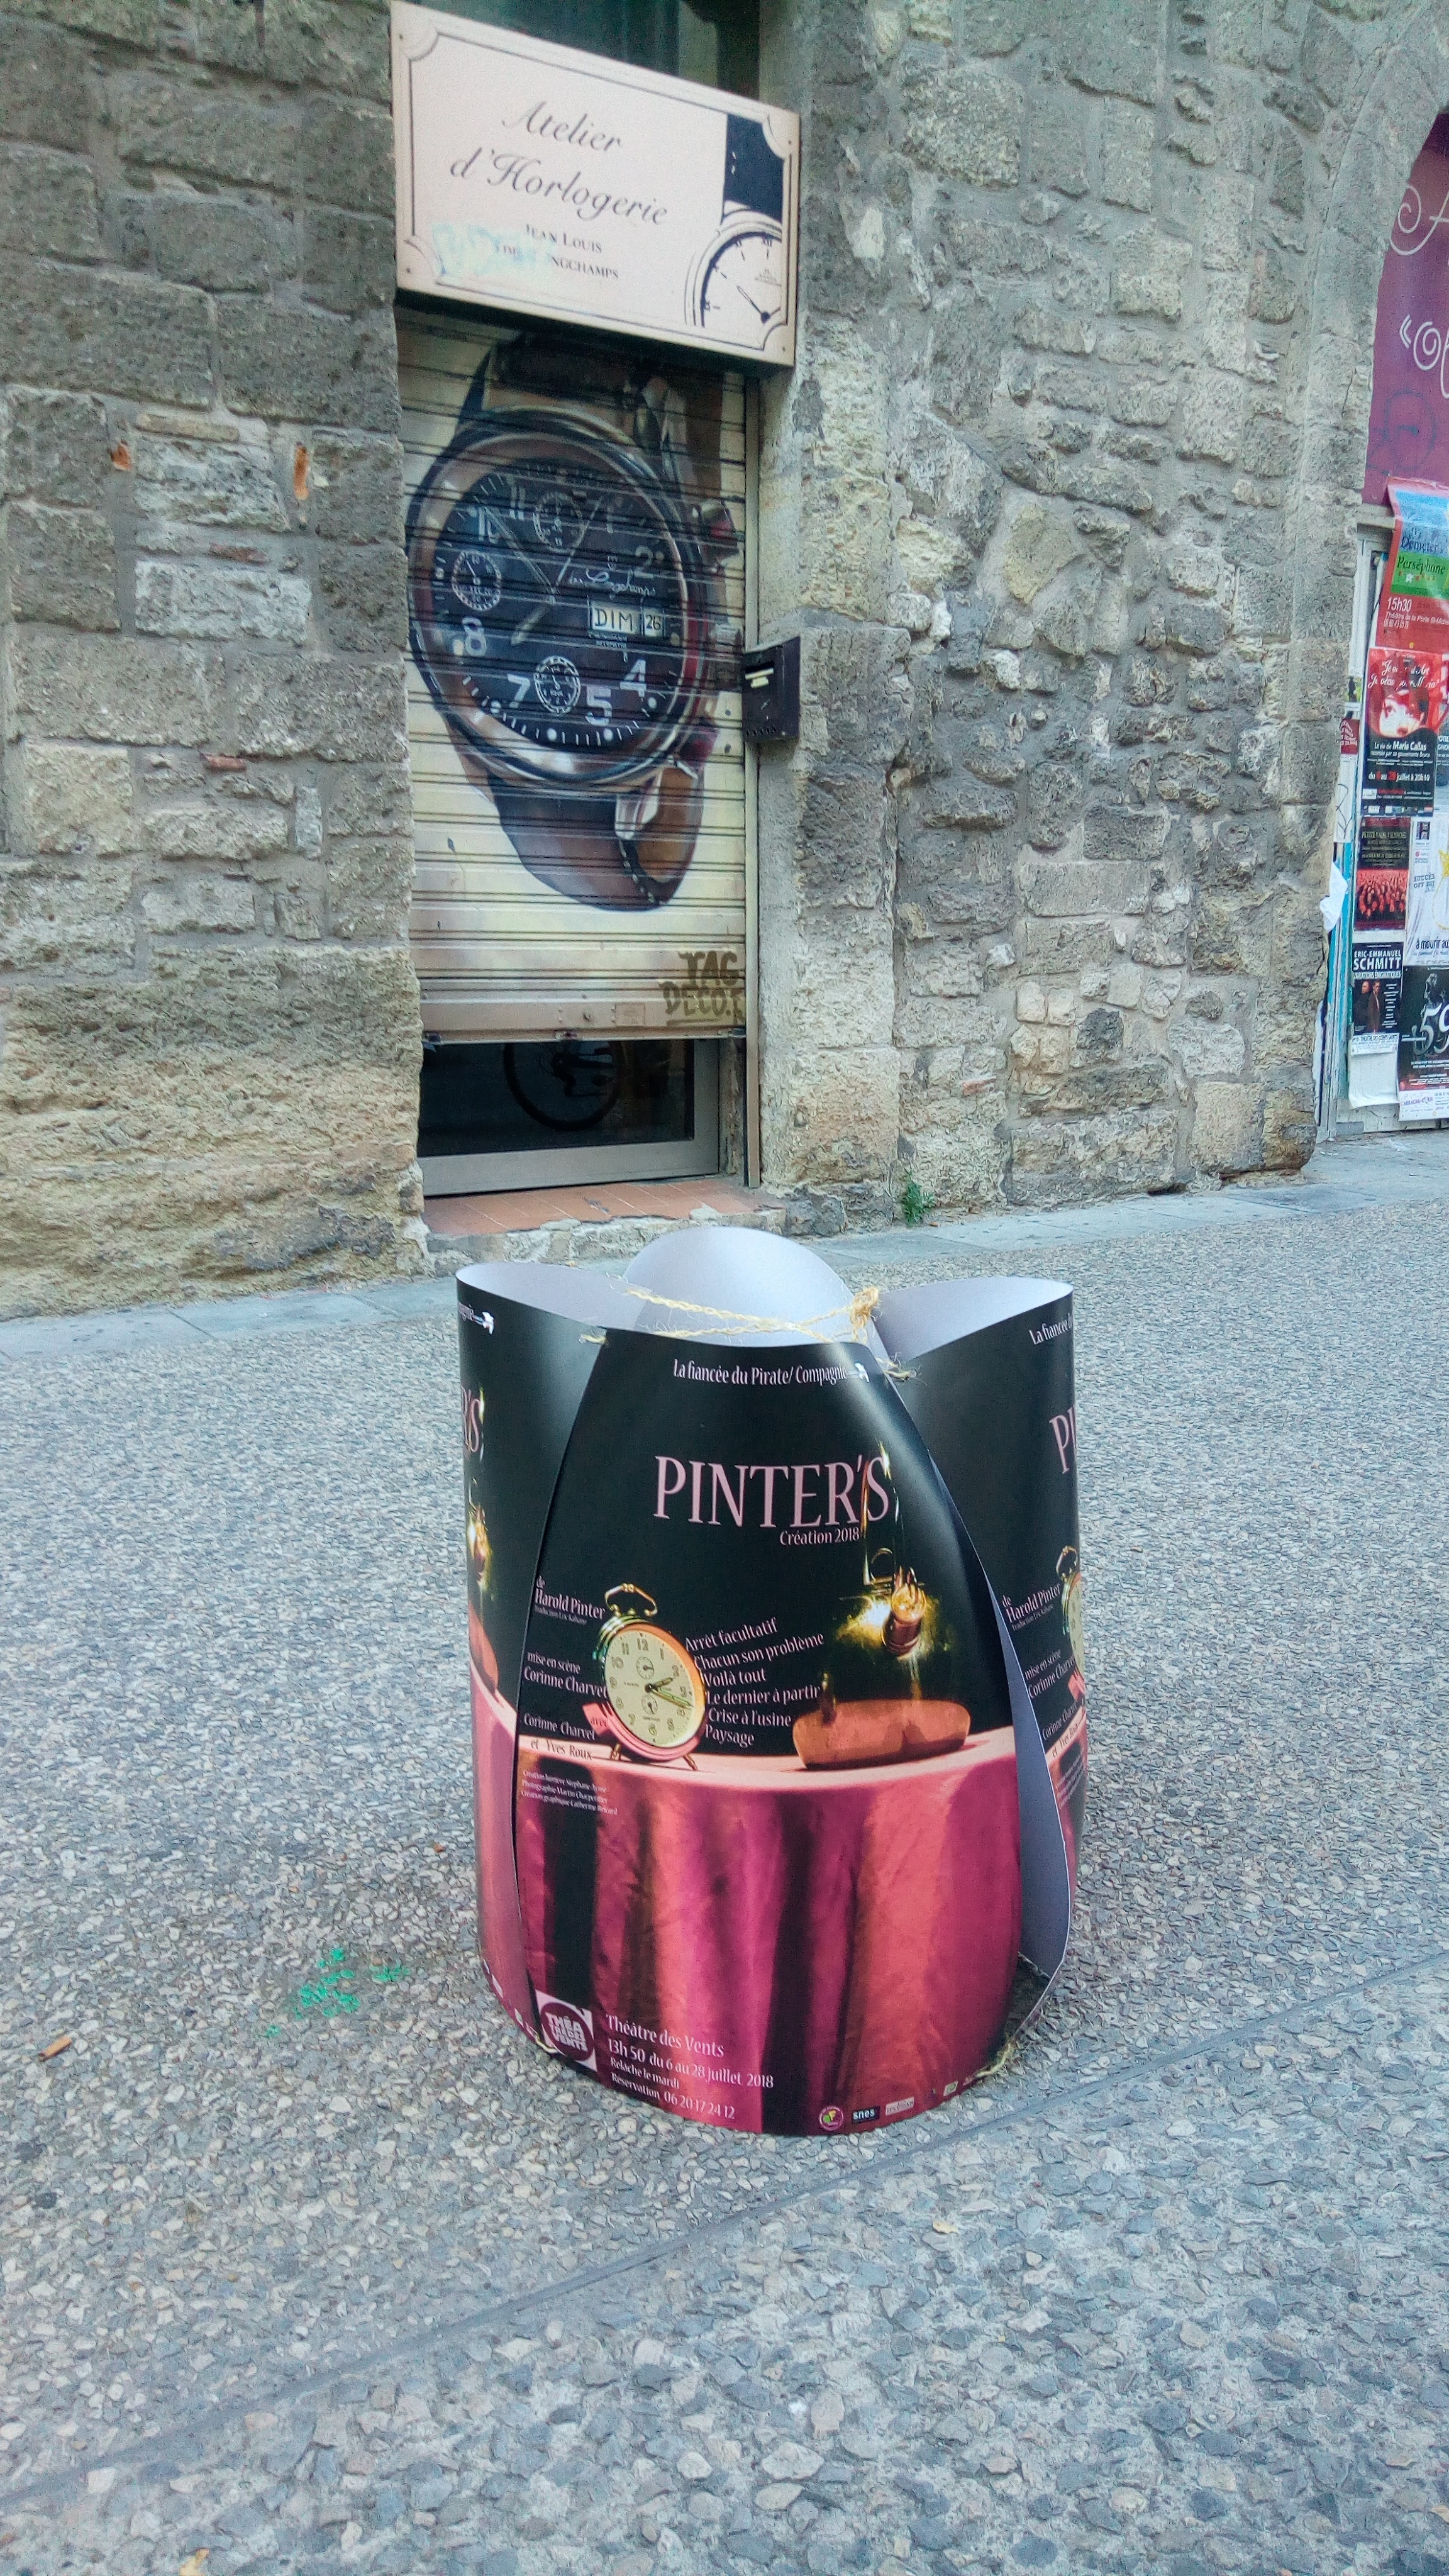 Pinter's - Campagne d'affichage - Avignon 2018